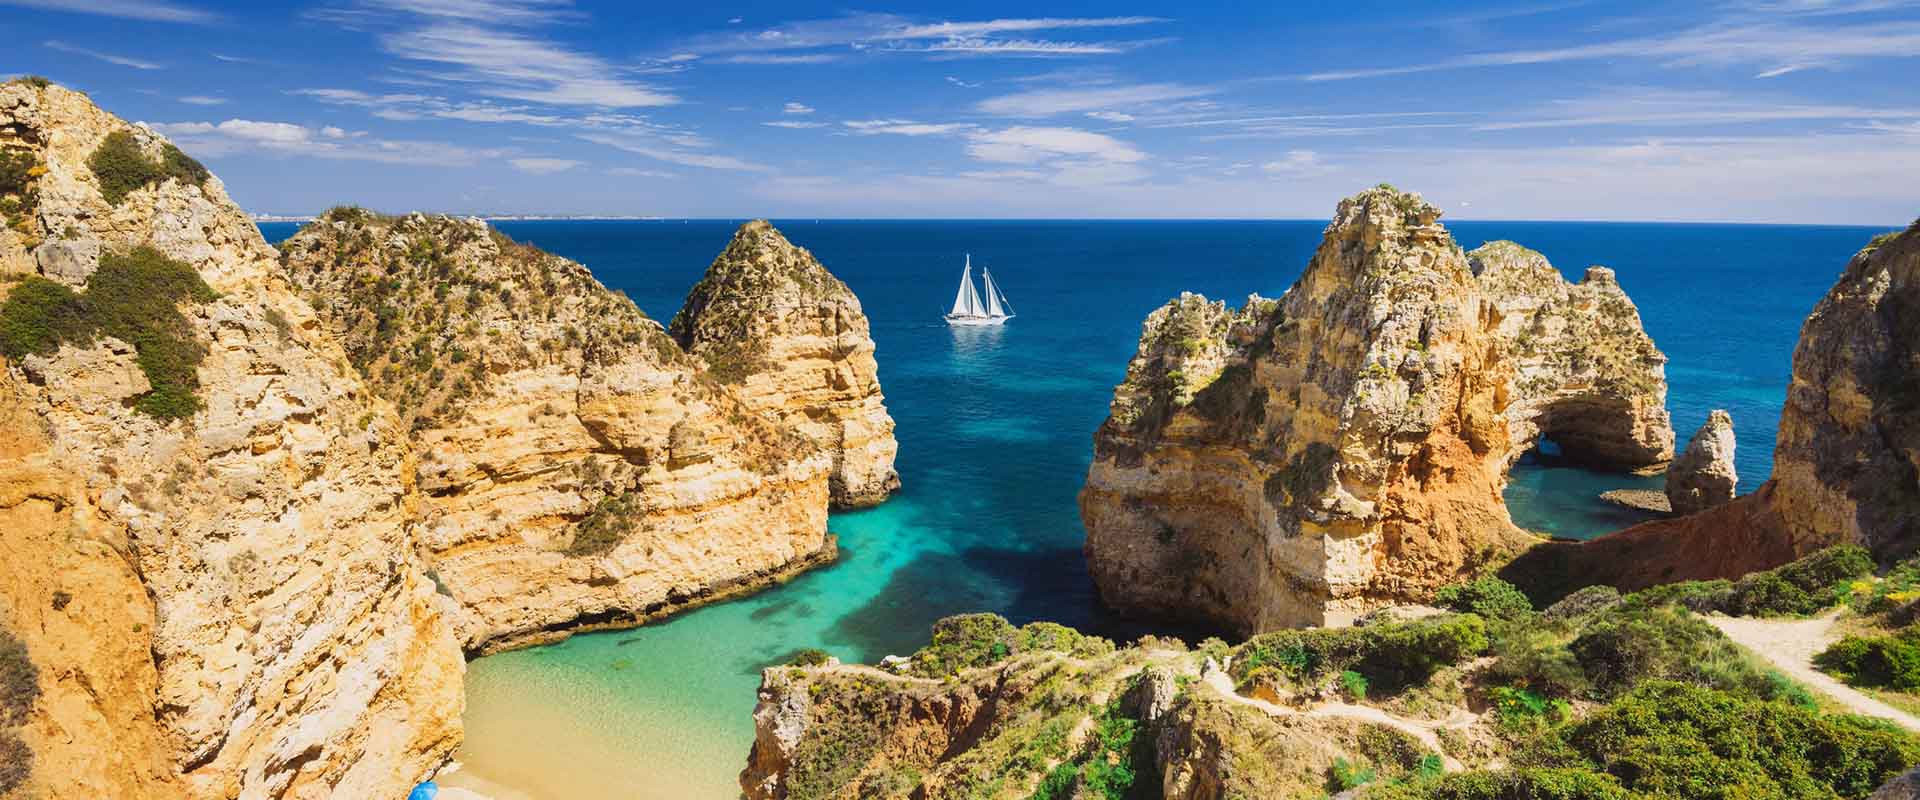 Adventure Cruise Ships in Portugal - LiveAboard.com